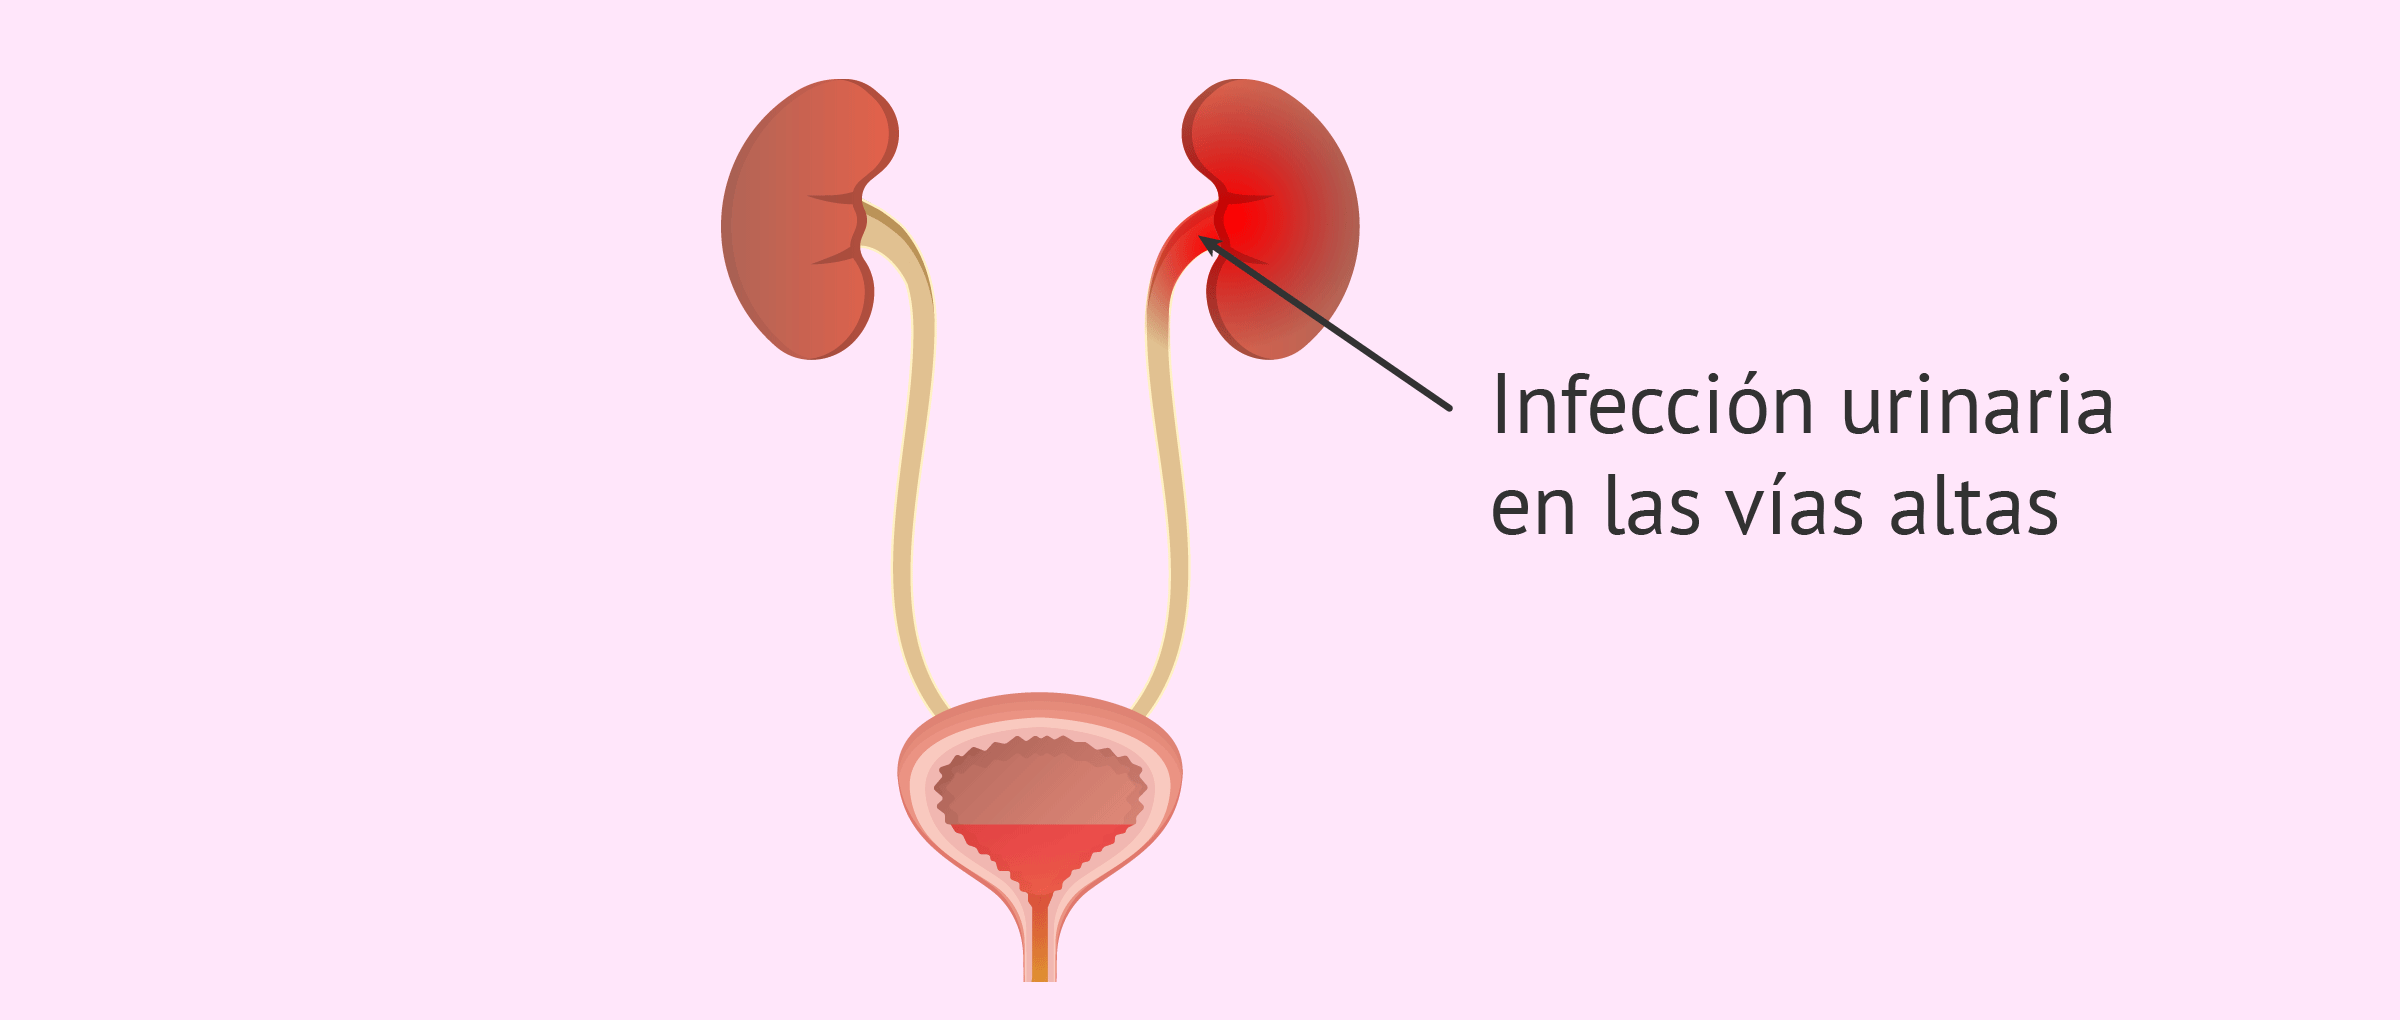 Infecciones Urinaria Guadalajara infecciones urinaria guadalajara Infecciones Urinaria Guadalajara infeccion 1